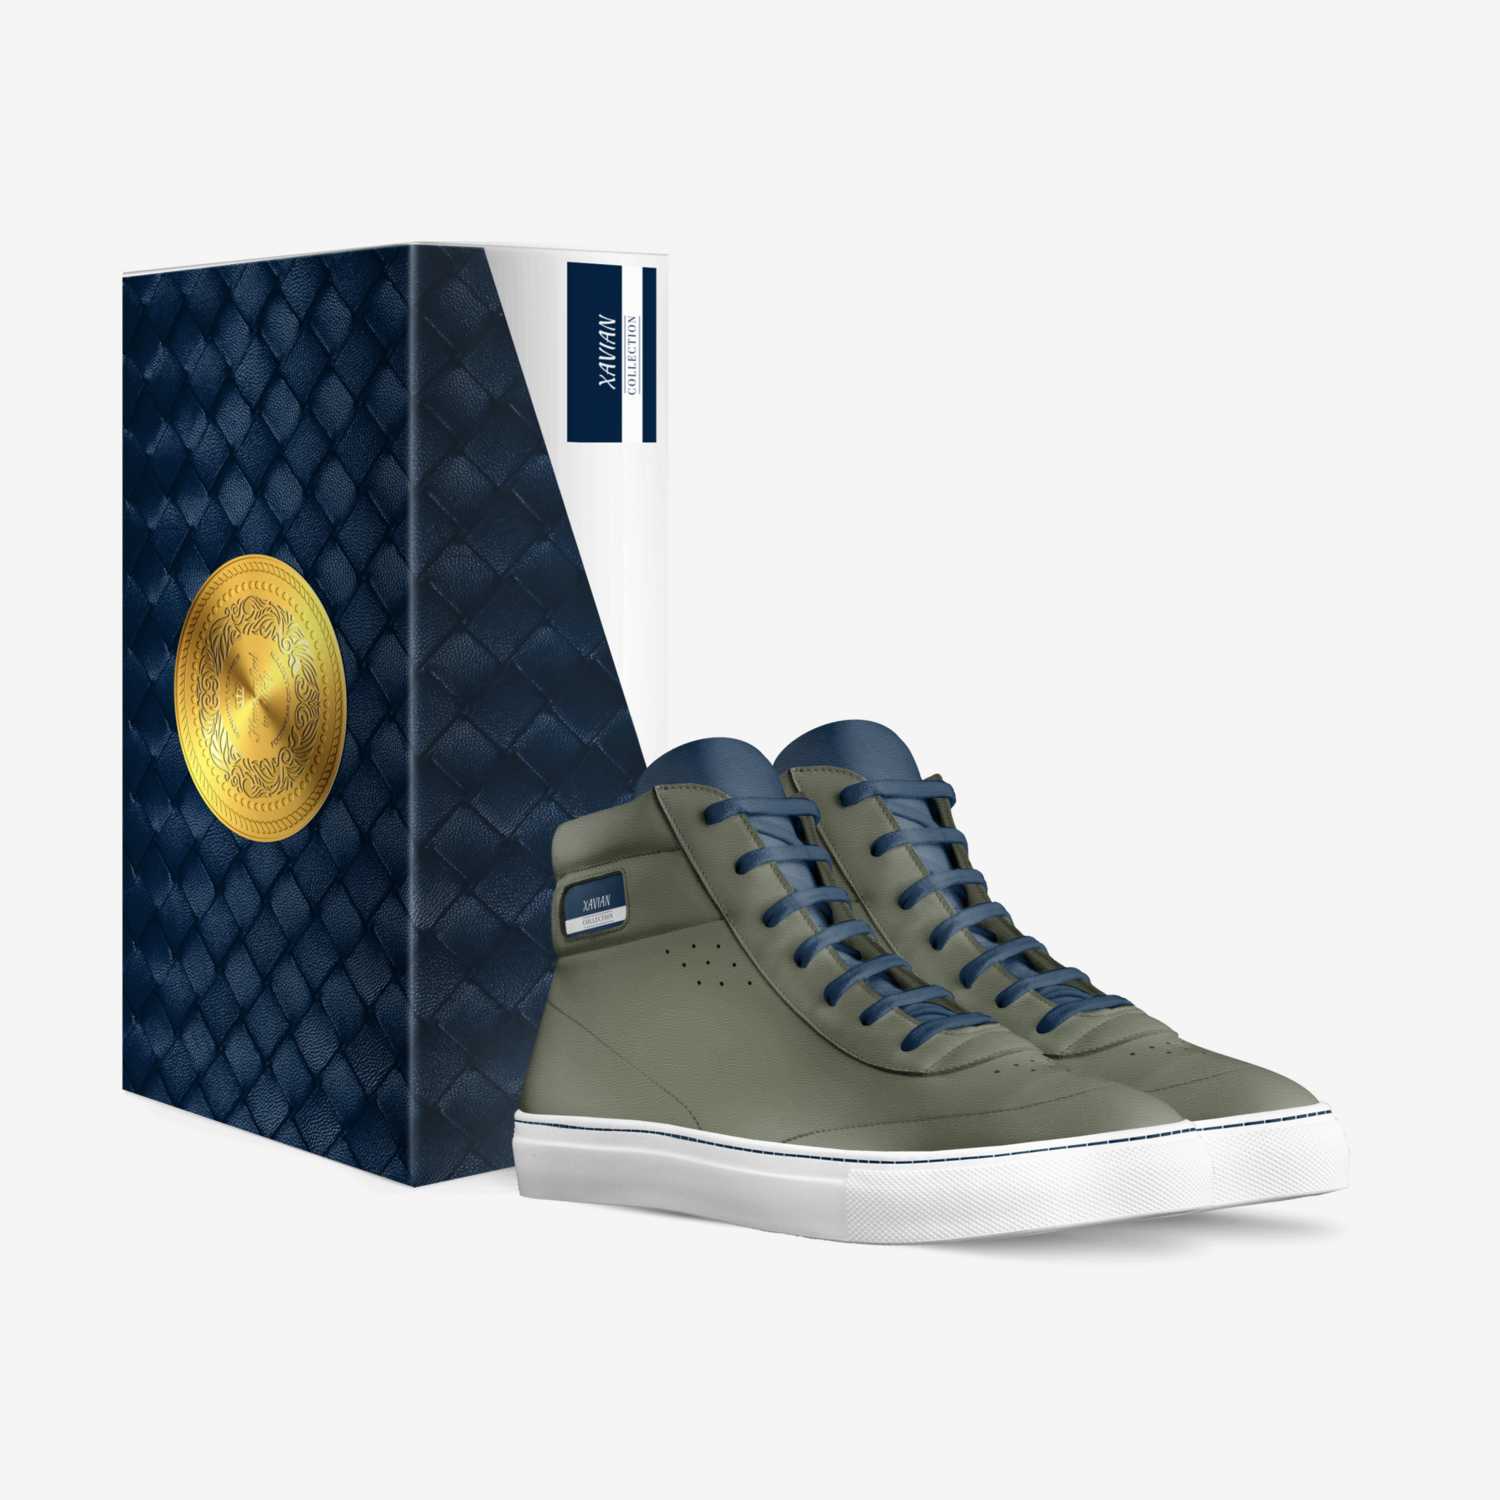 XAVIAN custom made in Italy shoes by Arisha | Box view